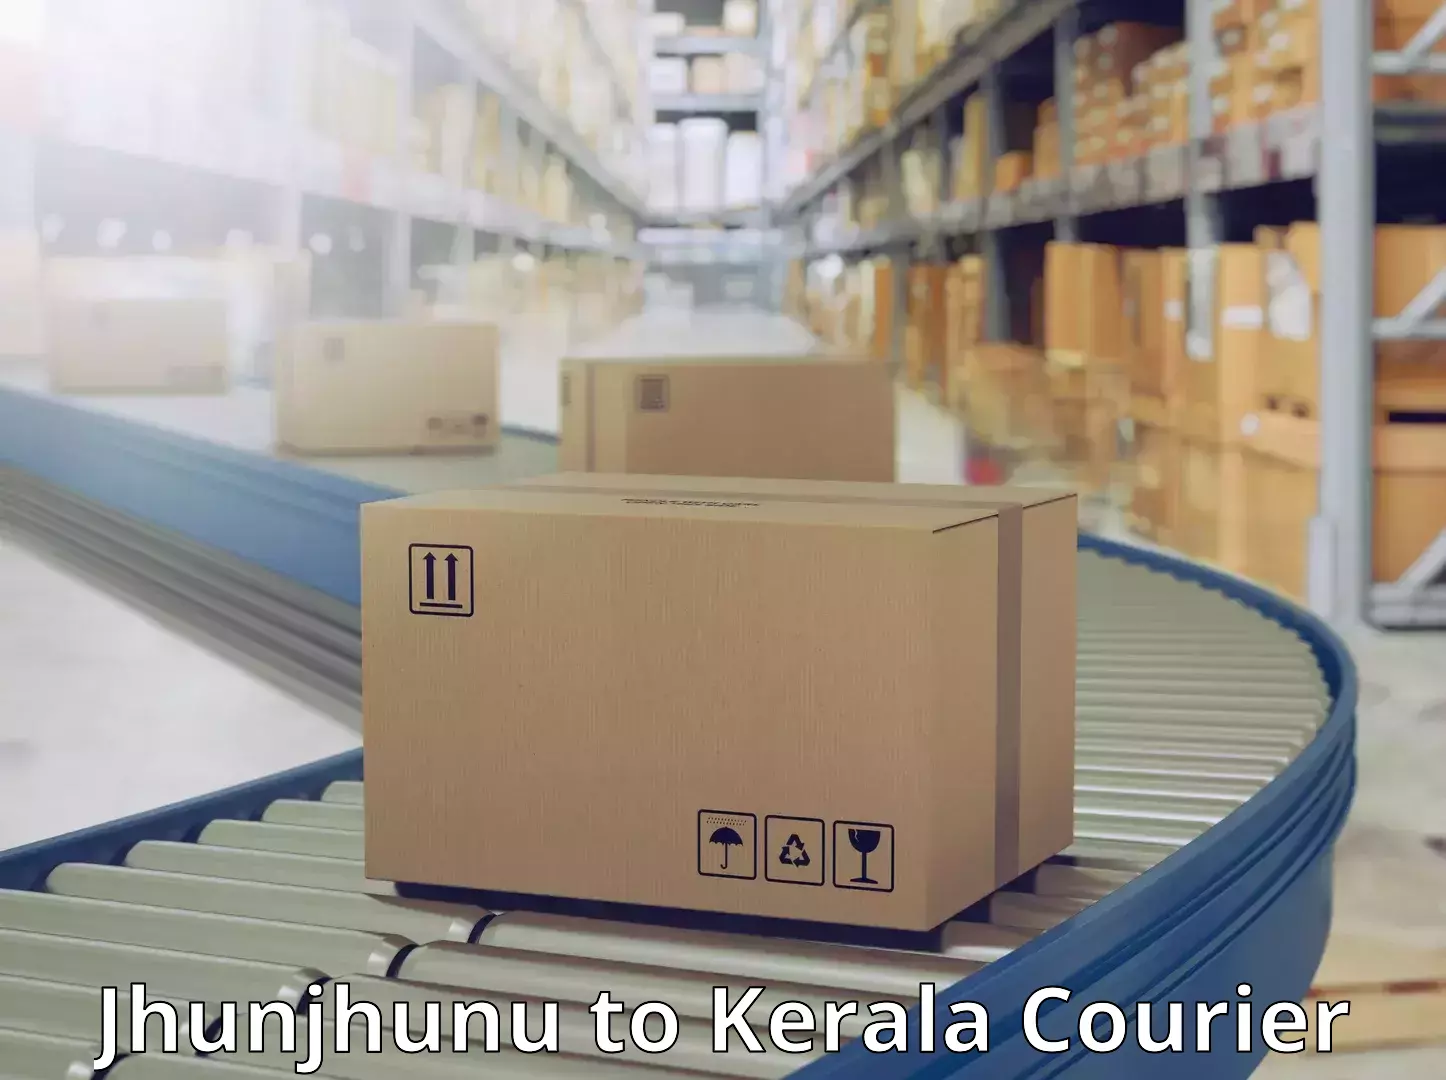 Customer-focused courier Jhunjhunu to Kalanjoor